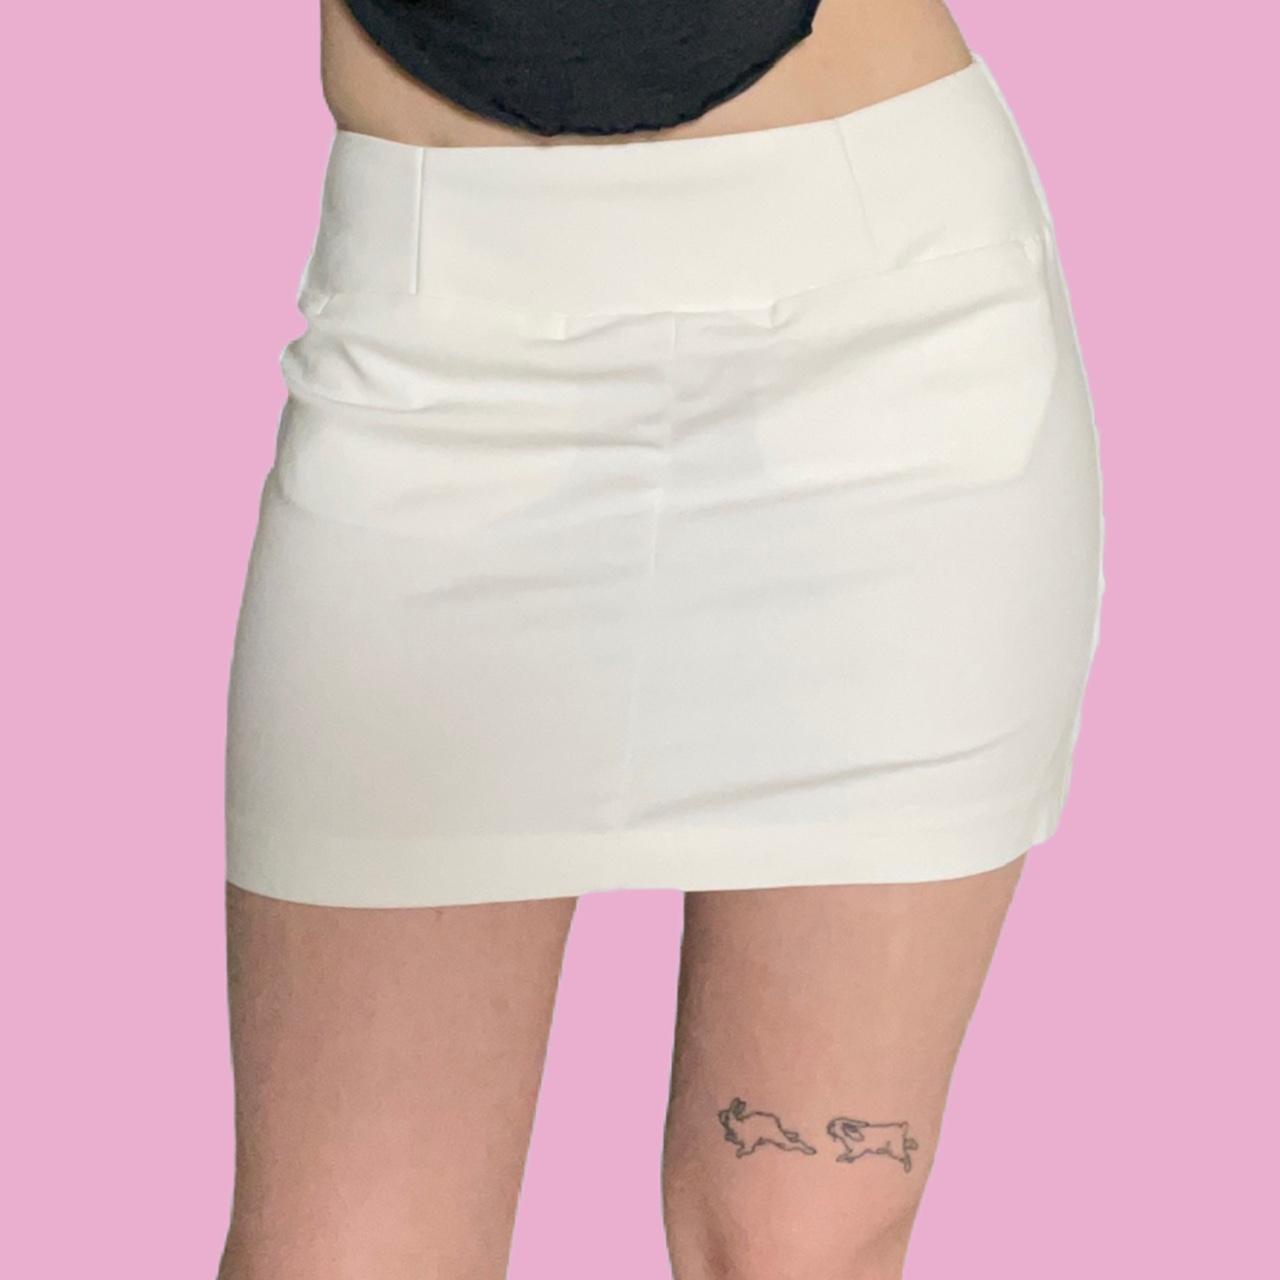 Product Image 4 - White mini skirt 💌

✨Details:

Color: white